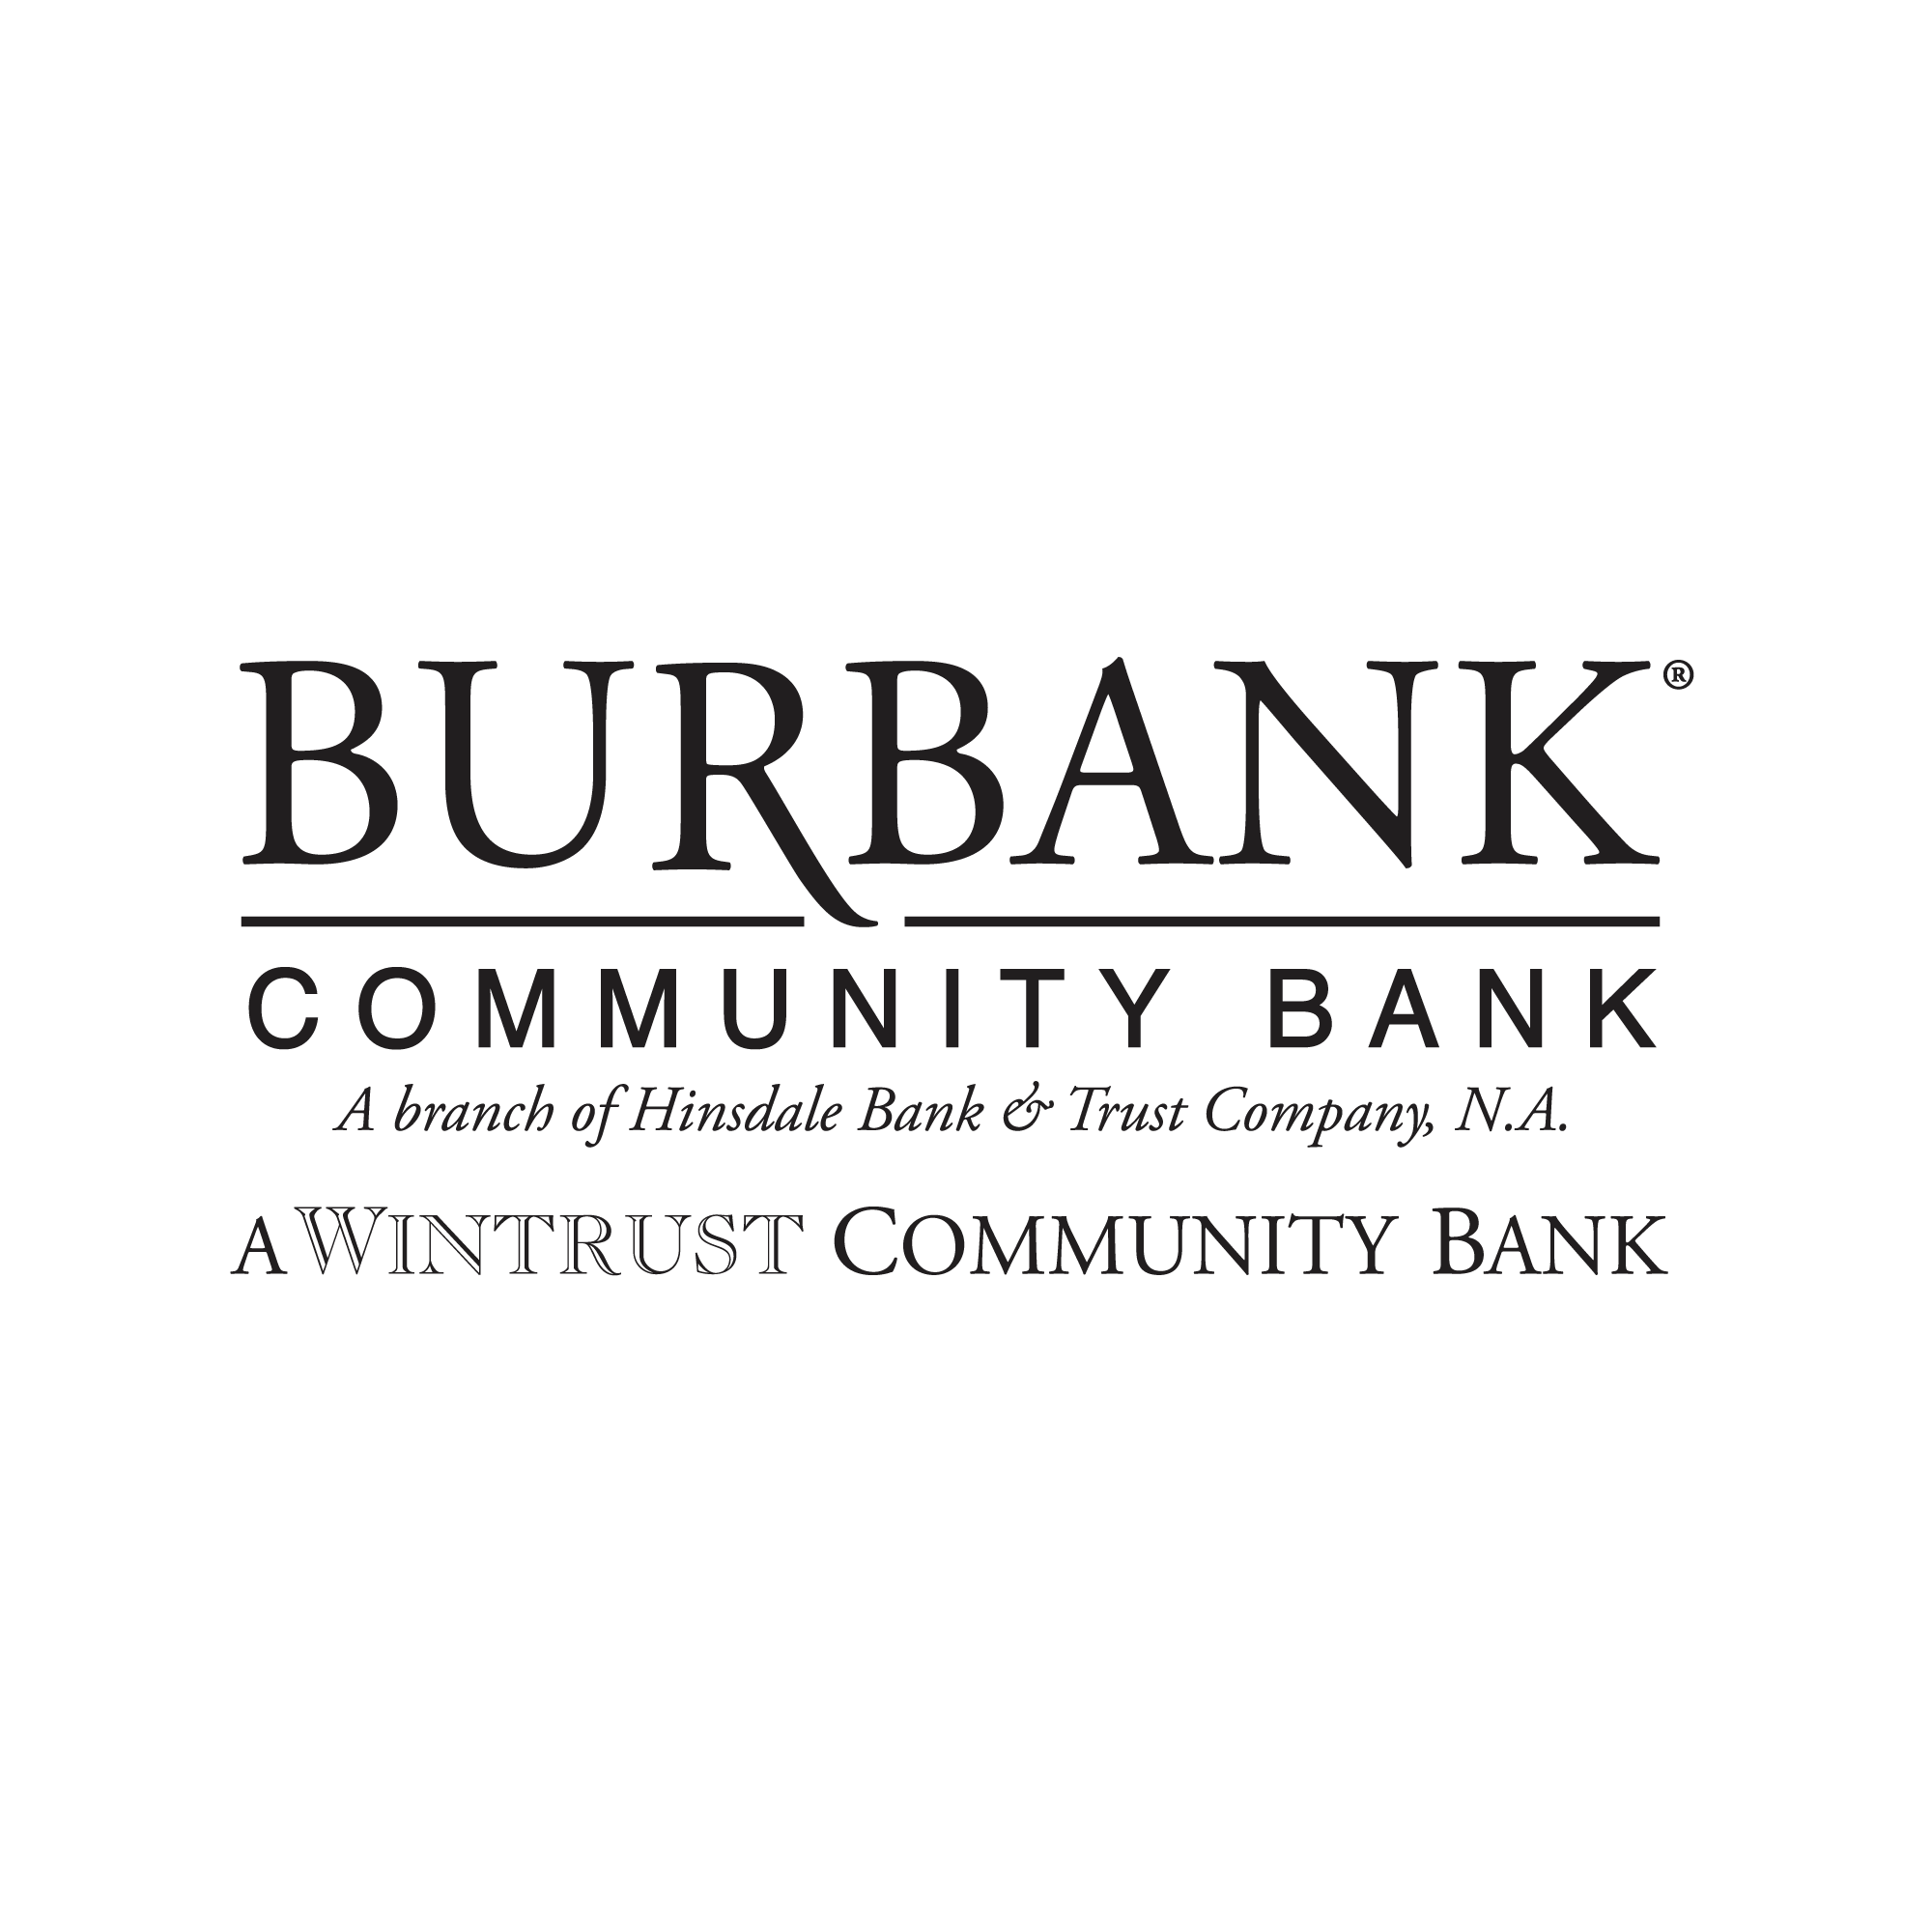 Burbank Community Bank